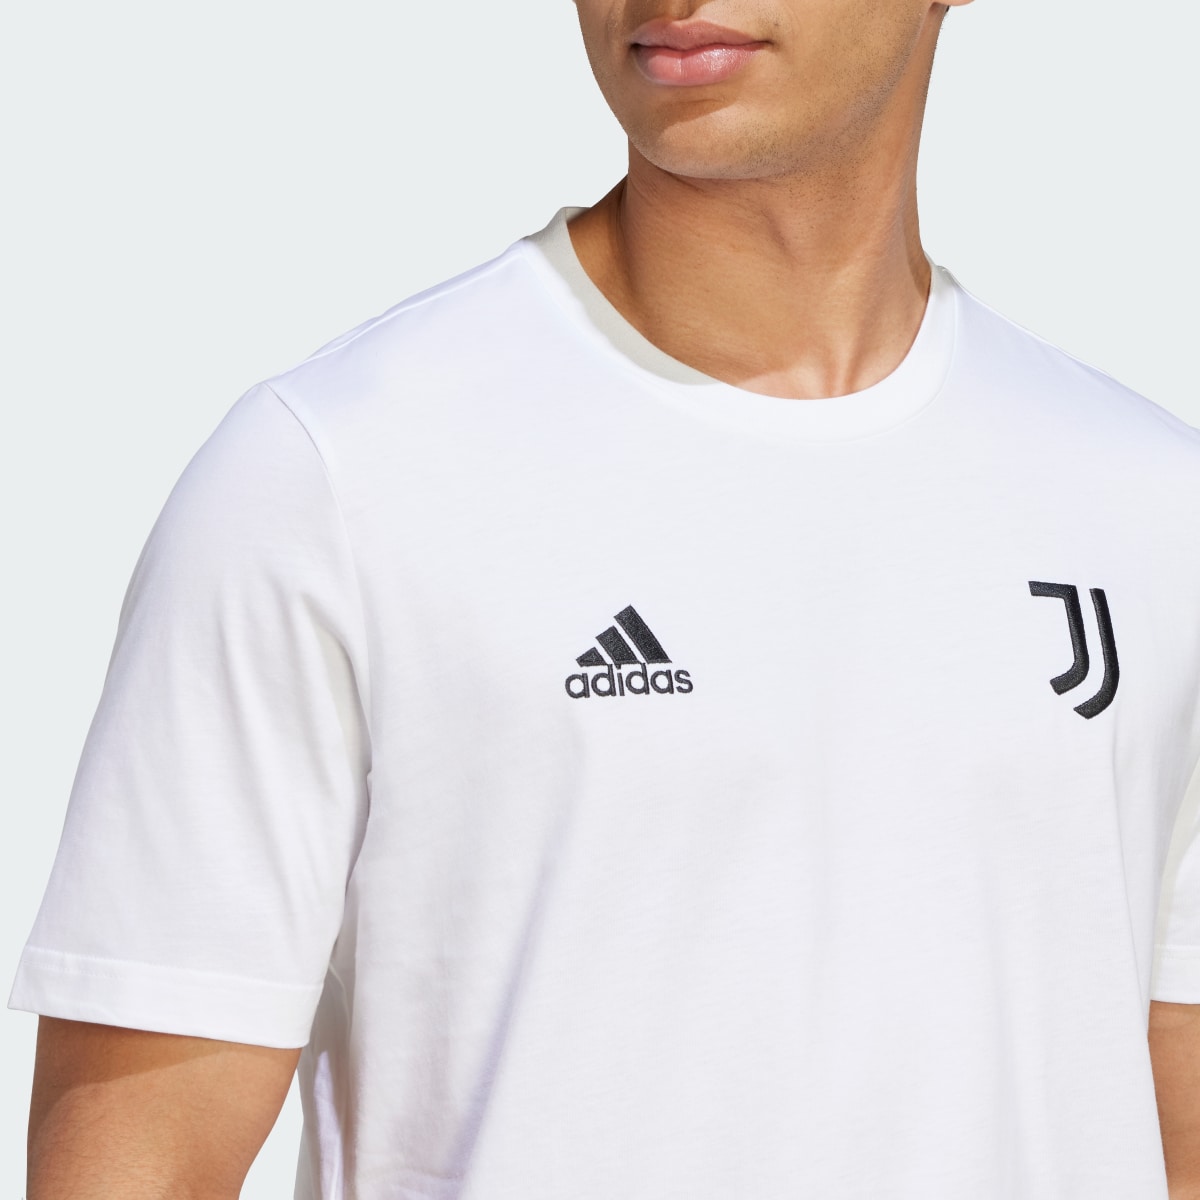 Adidas T-shirt Juventus DNA. 7